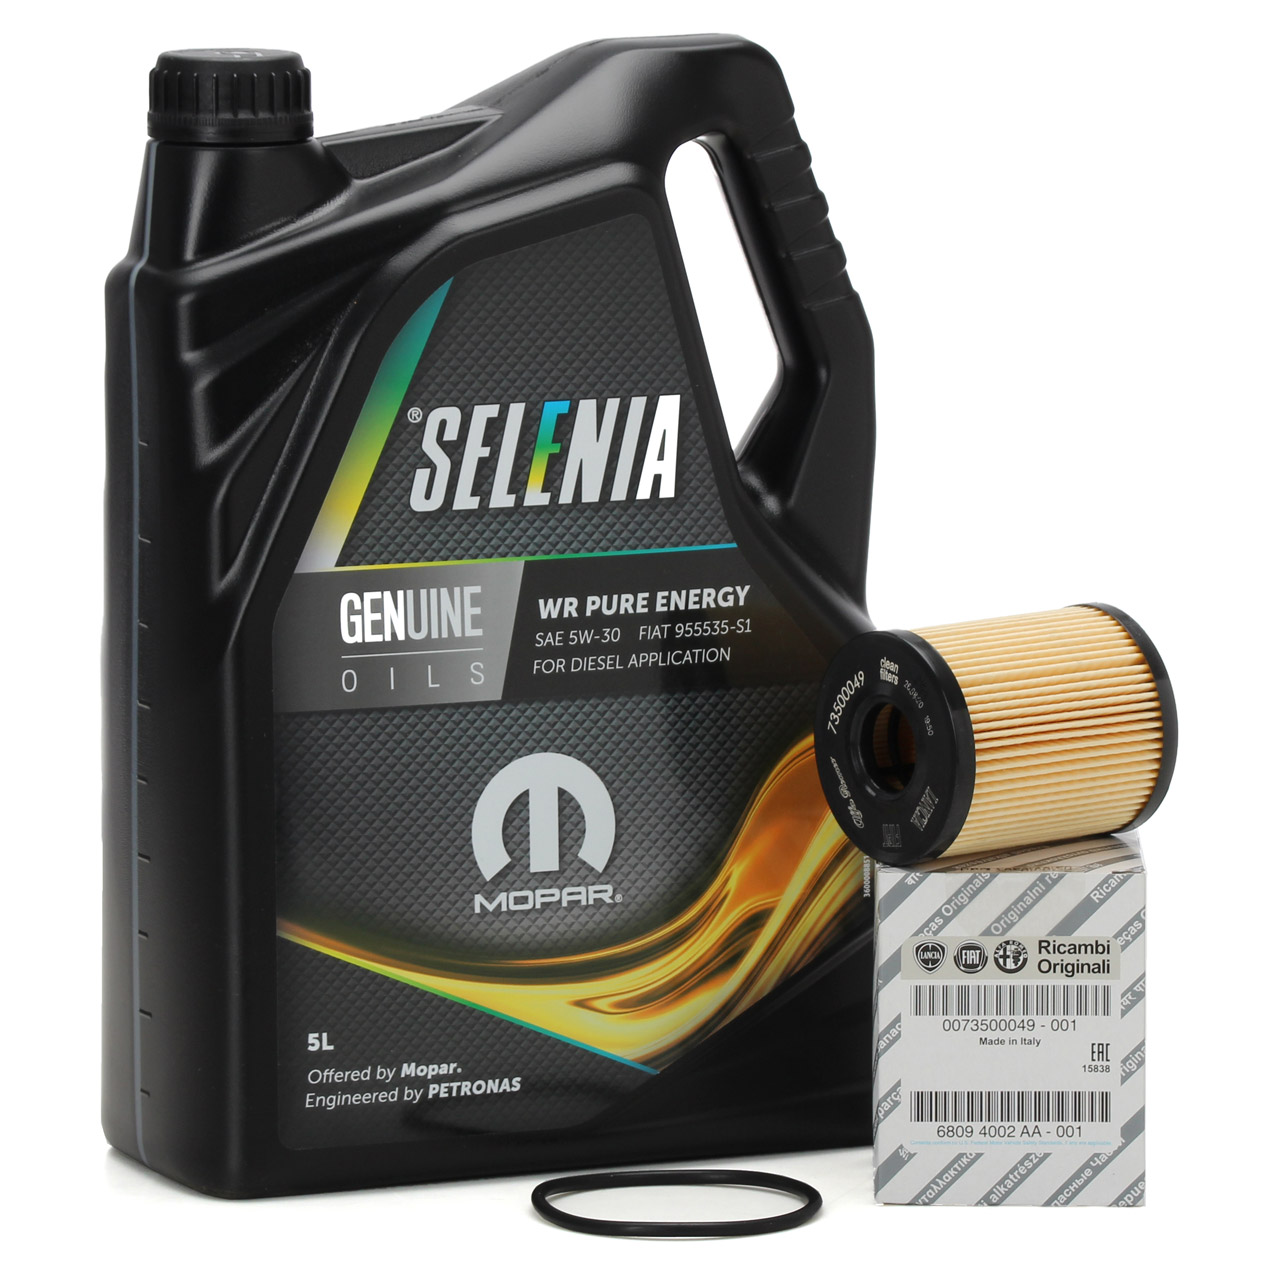 Selenia WR Pure Energy 5W-30 1 Liter